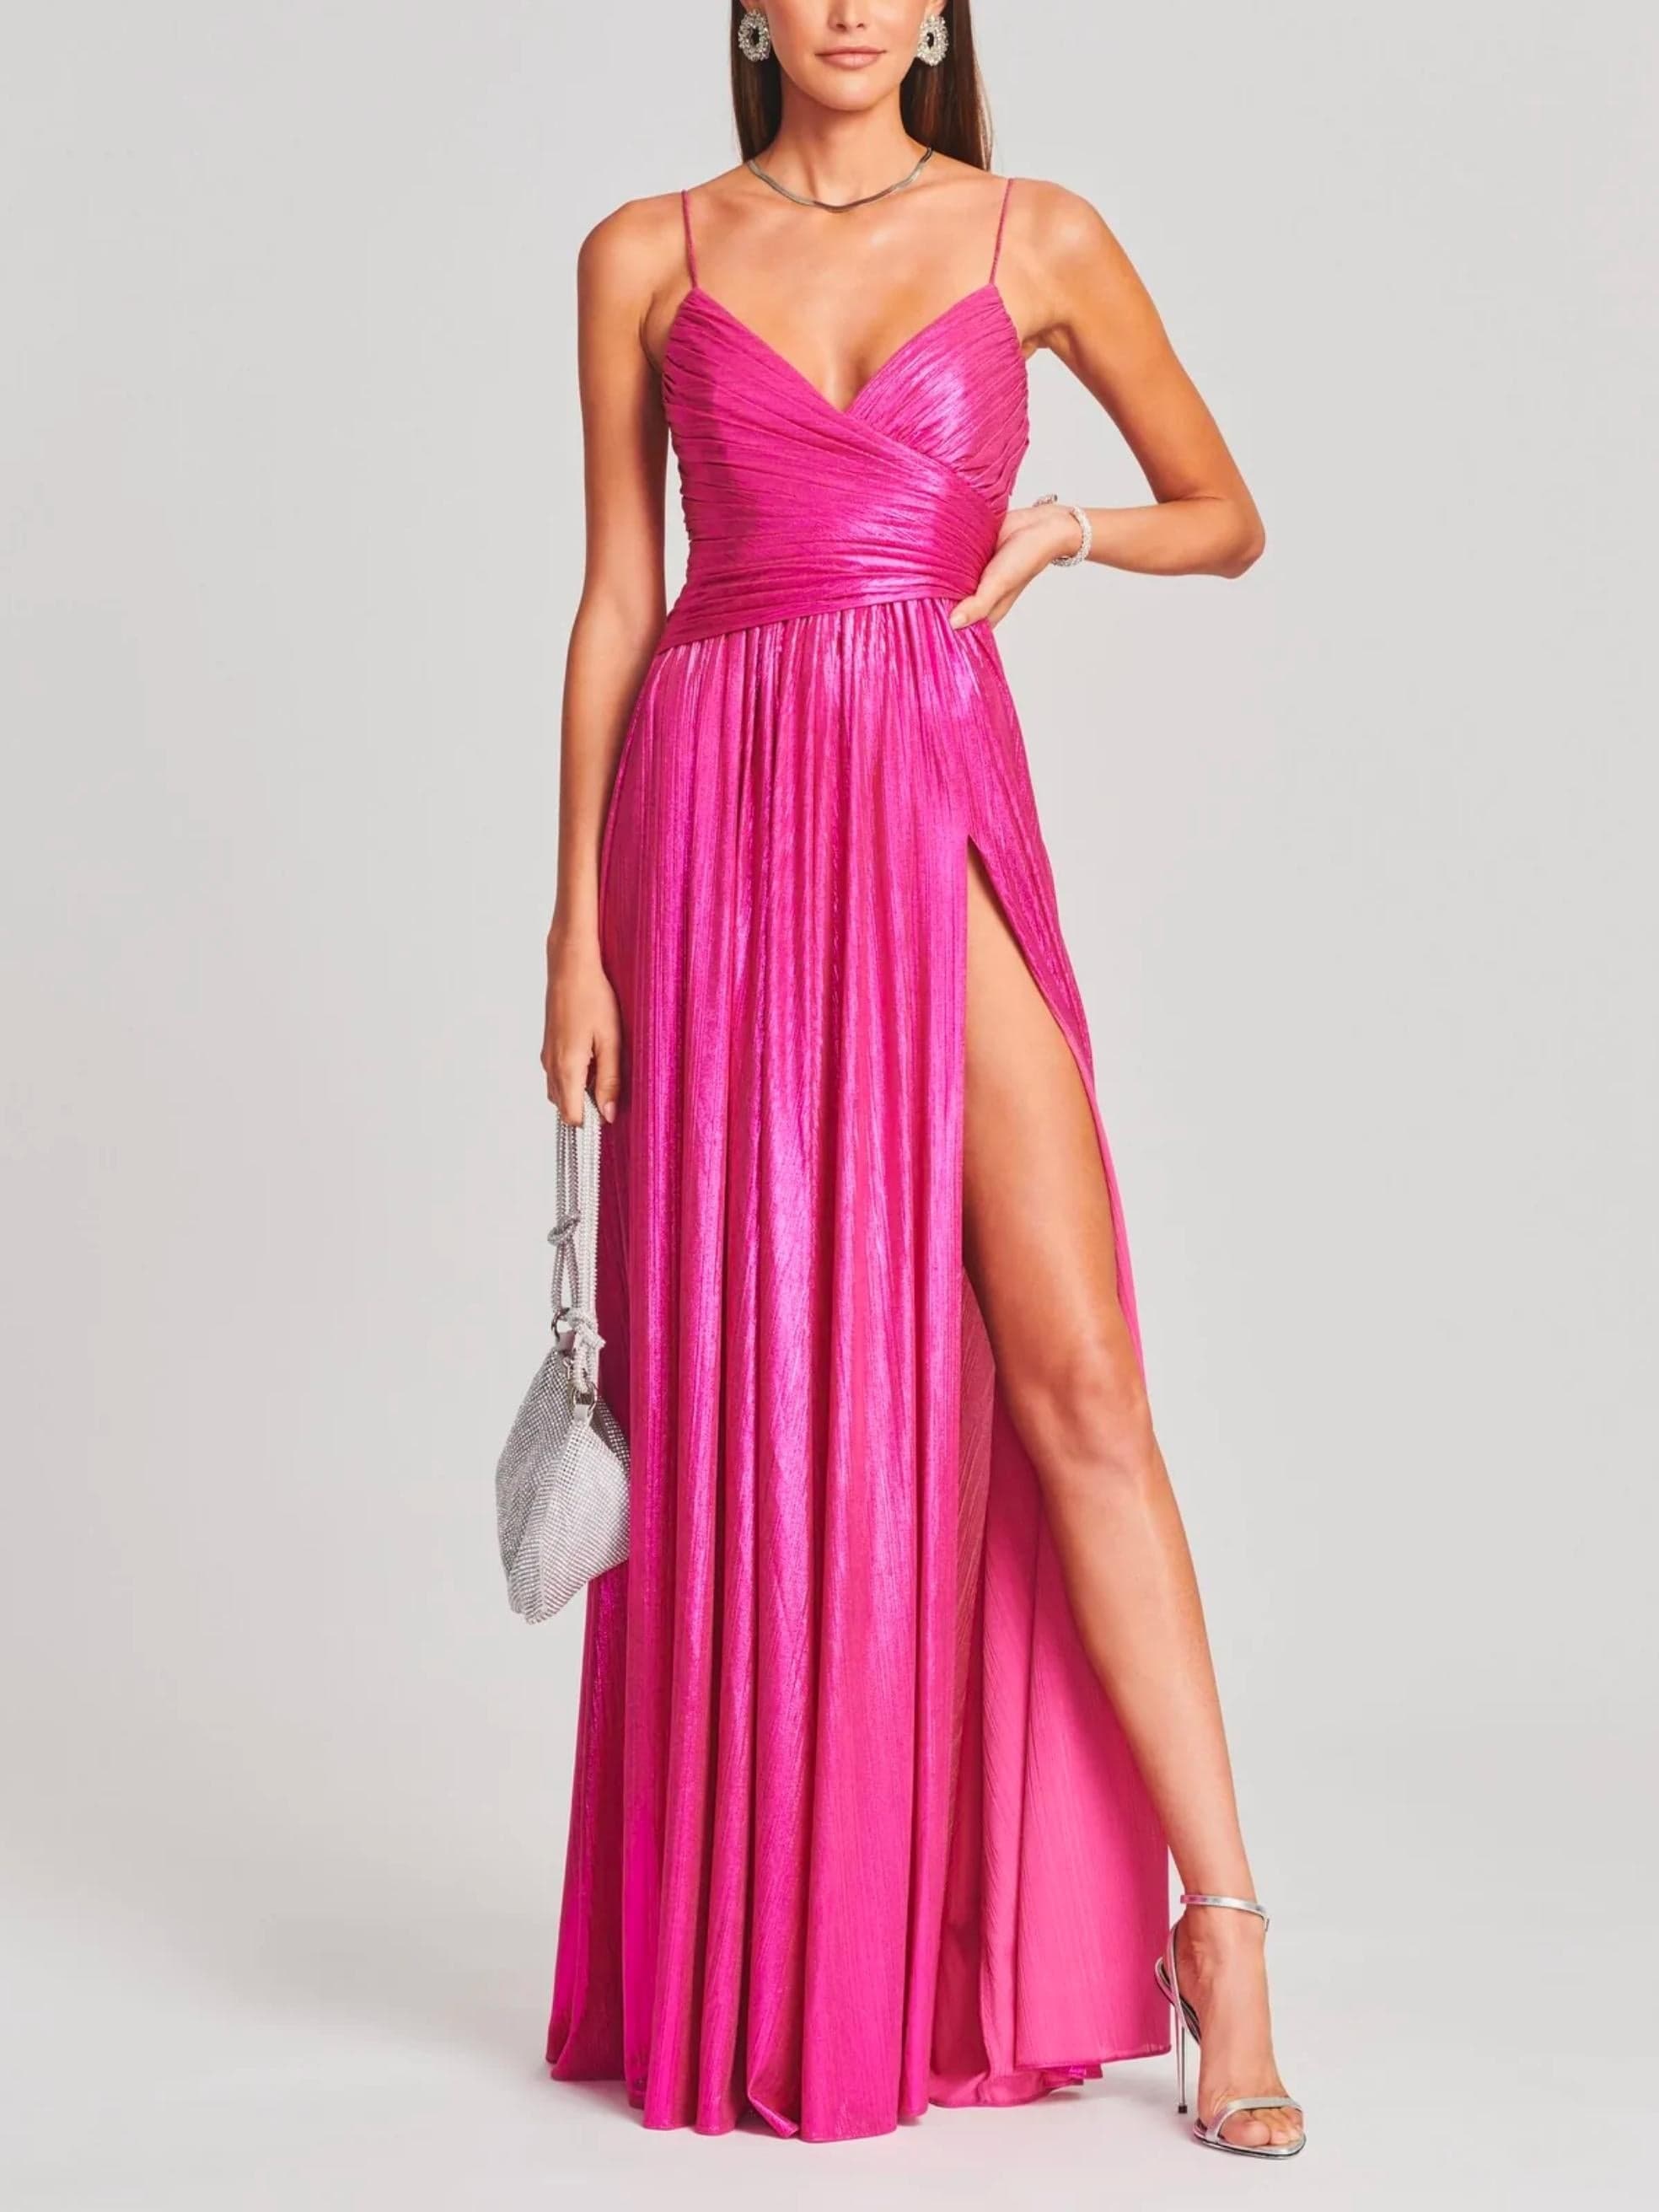 Doss Dress in Hot Pink